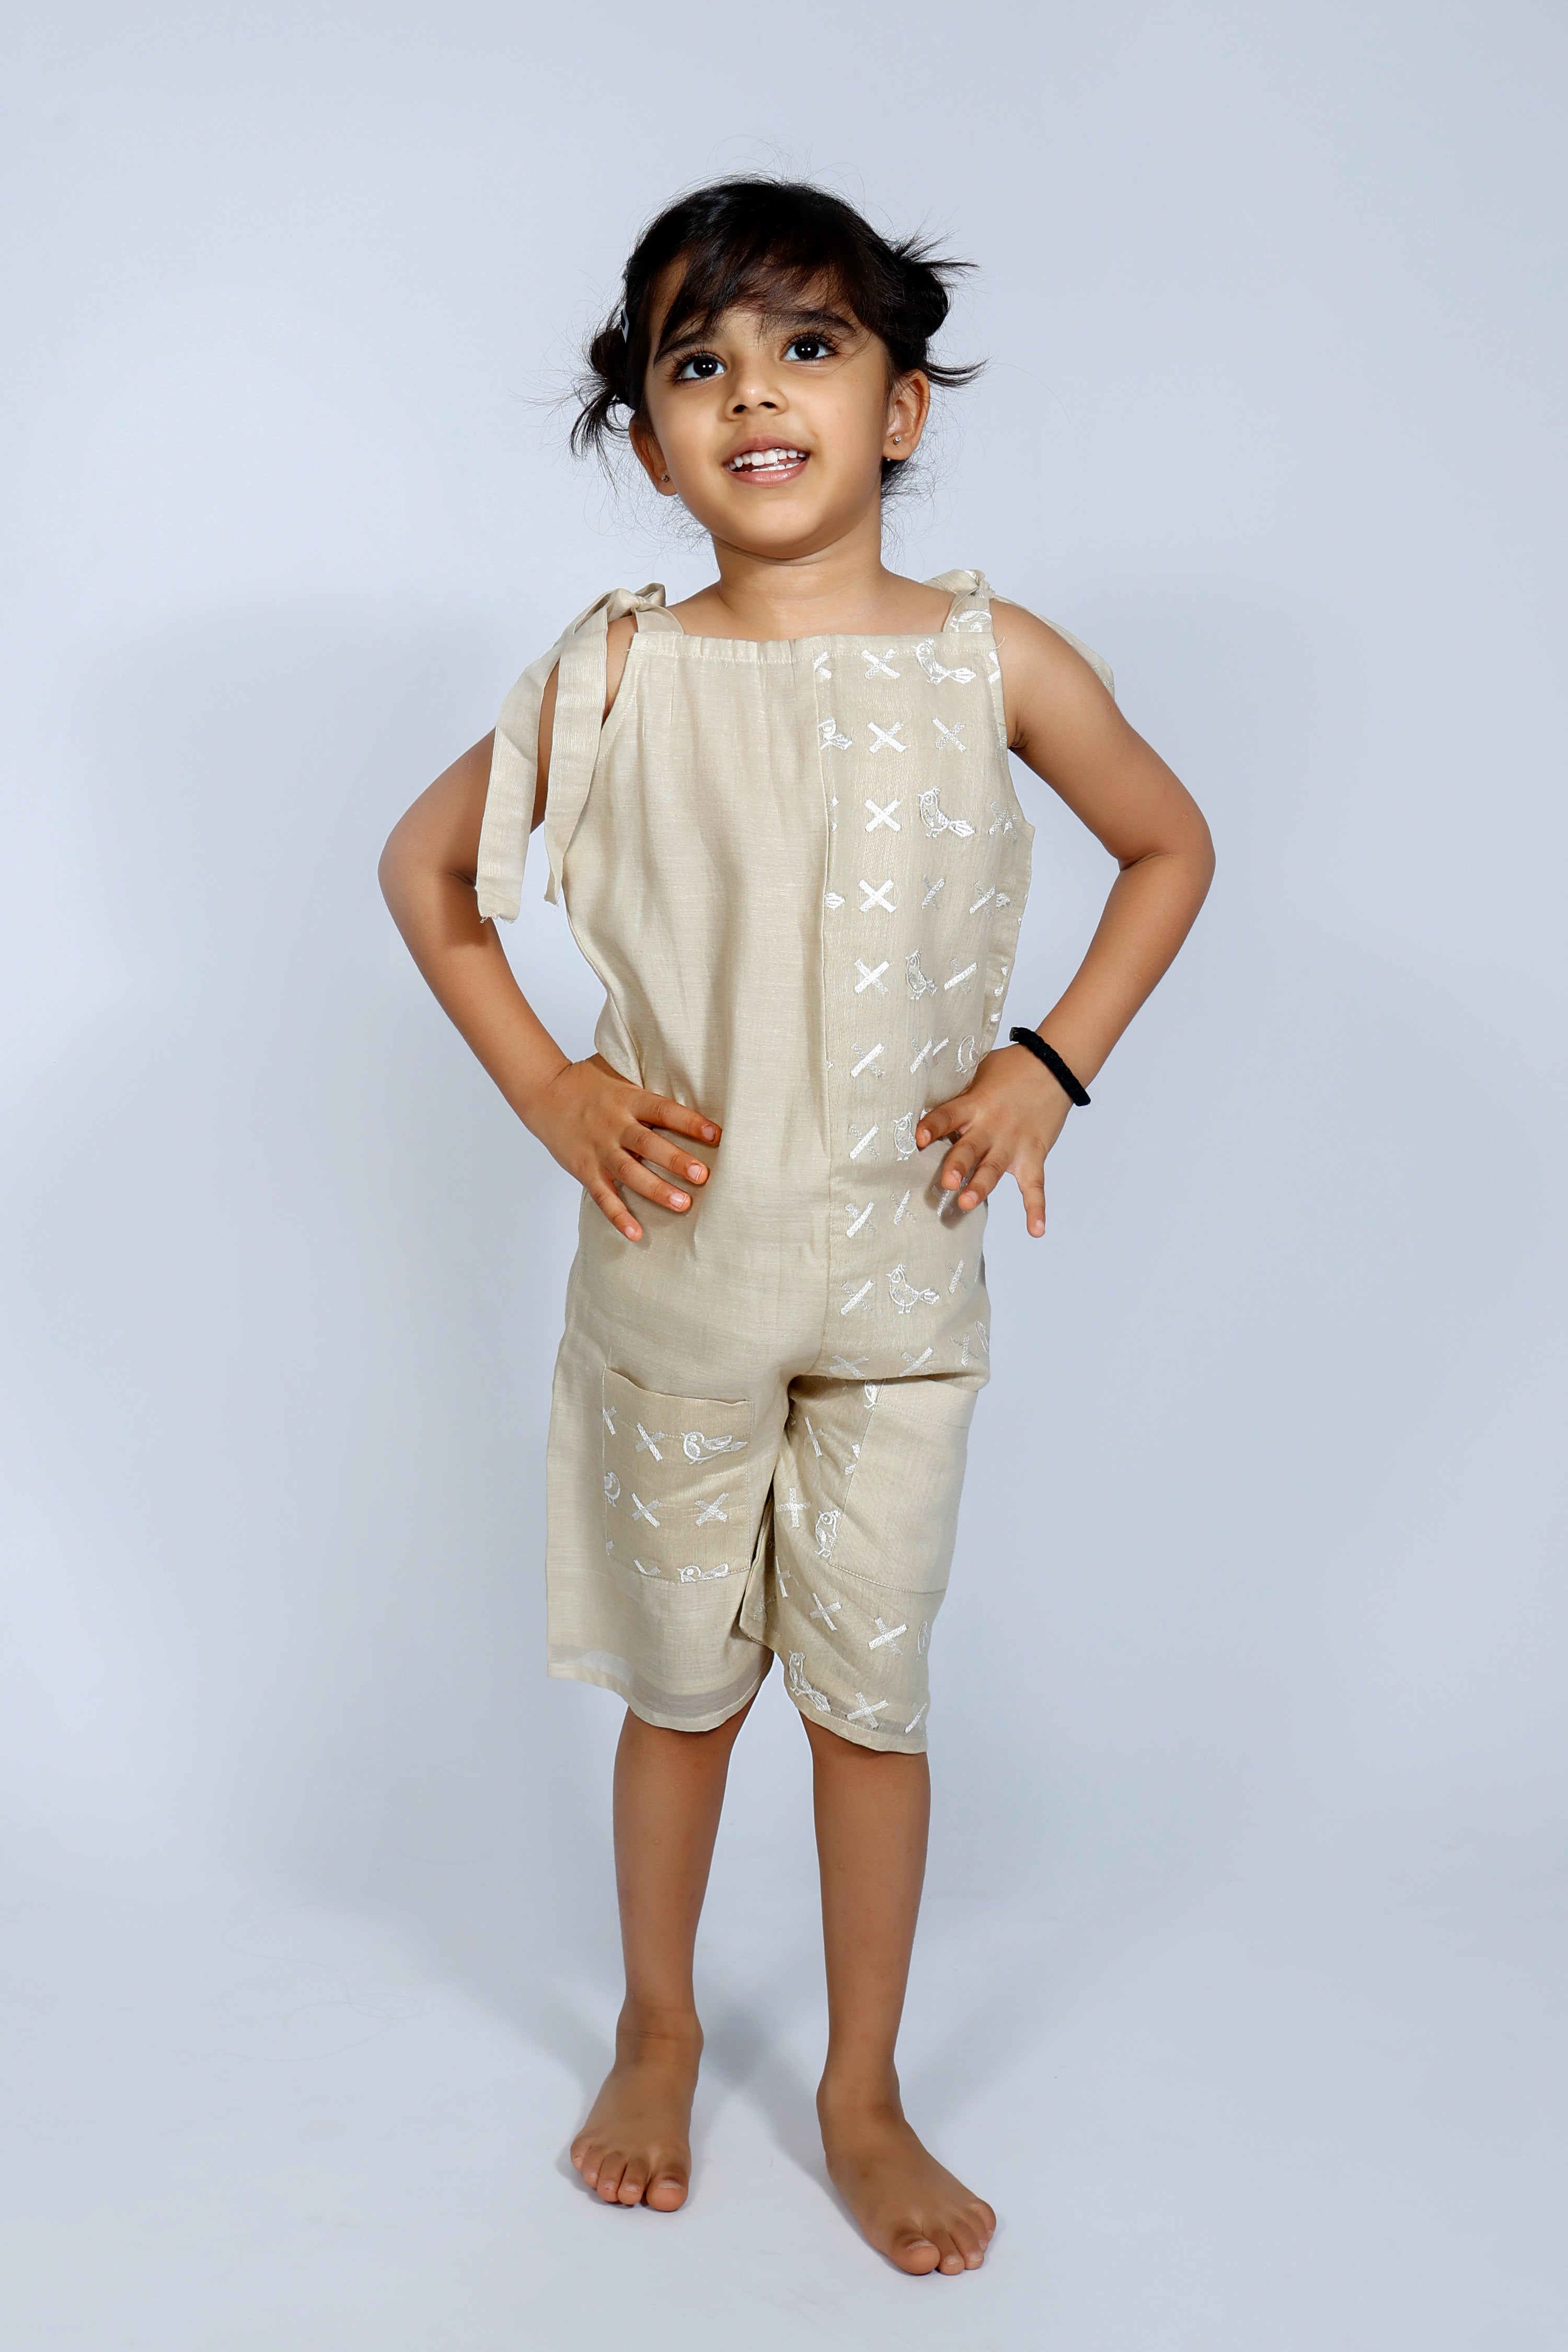 fcity.in - Jumpsuits For / Designer Kids Jumpsuits